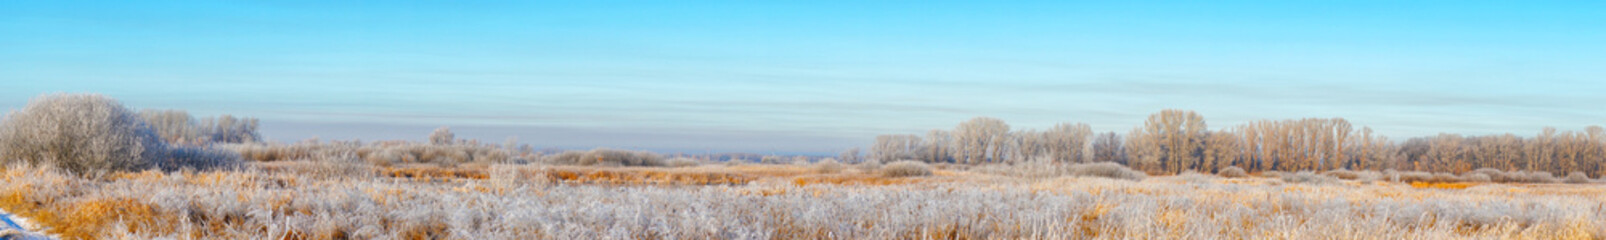 Panorama Frozen dry grass in hoarfrost in a large meadow field. Beginning of winter, frost